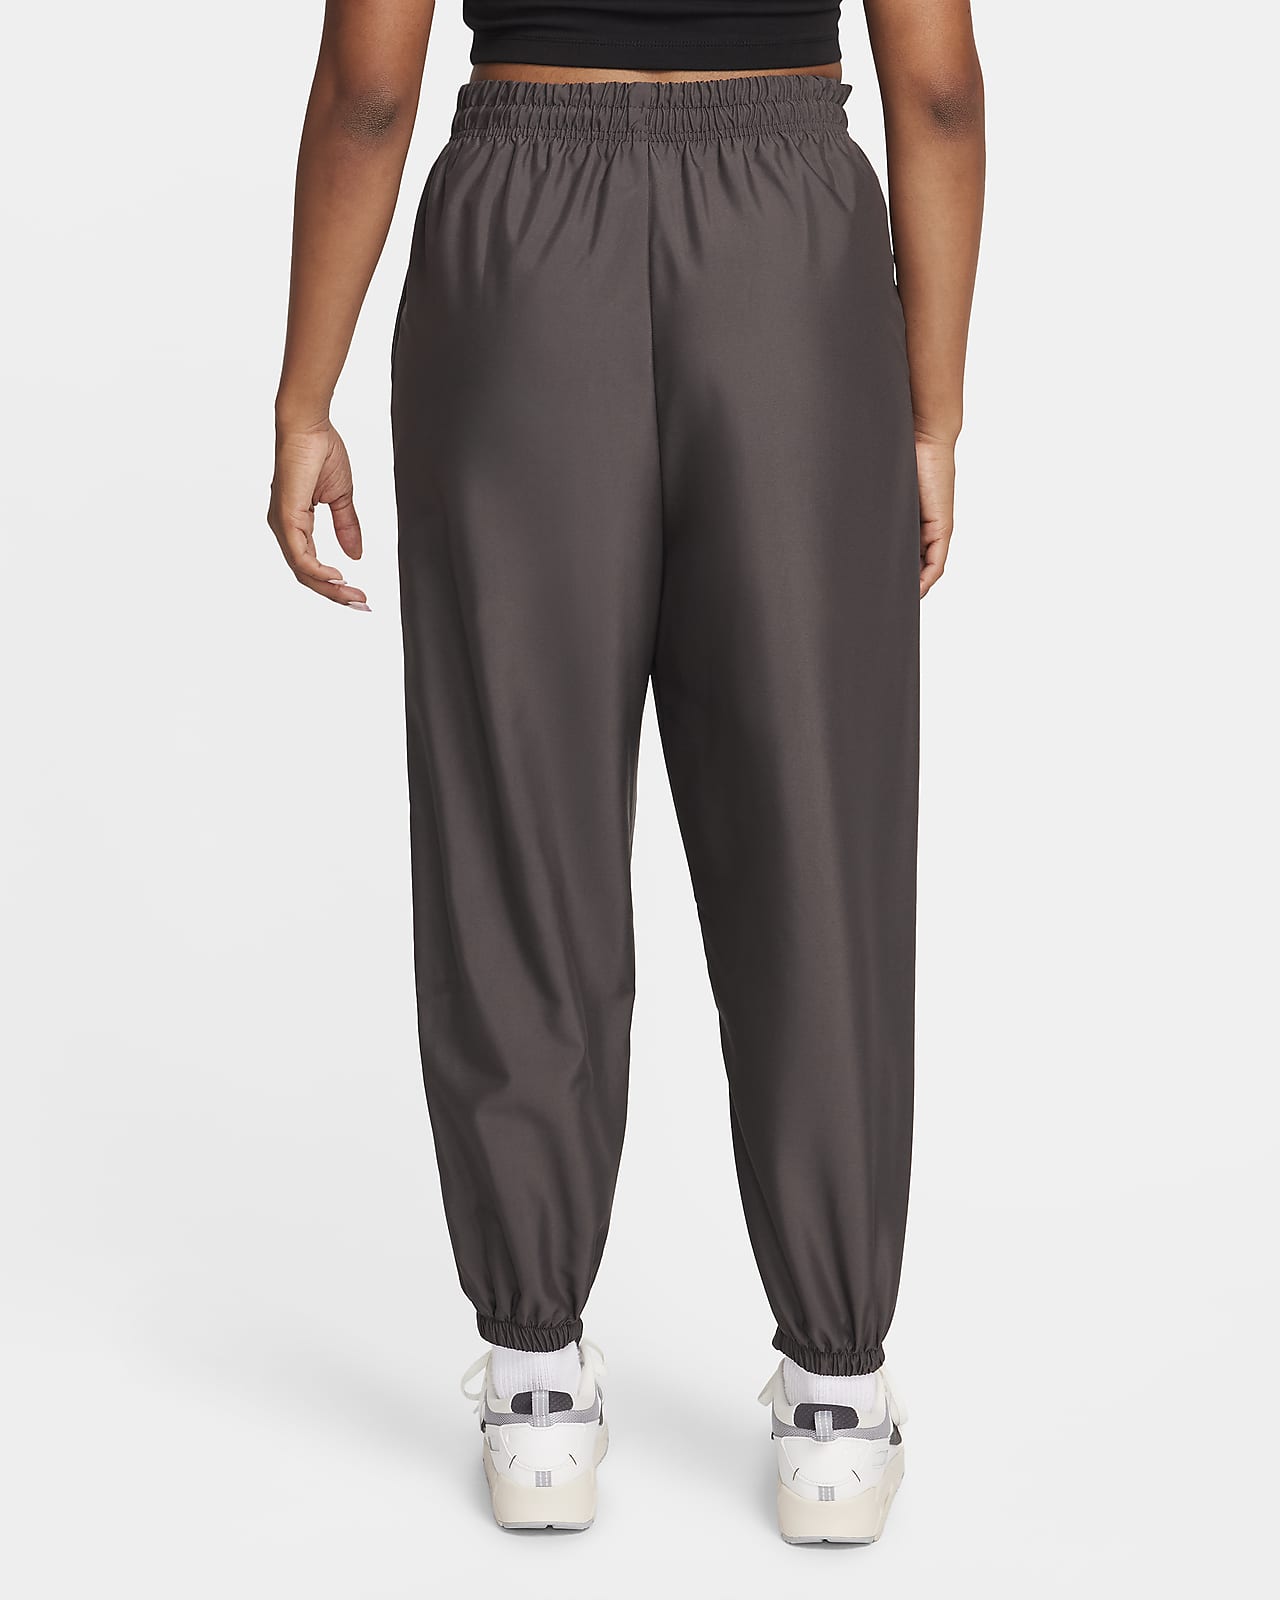 Nike Air Jordan Woven Pants Size M Joggers Womens Atomic Green CV7803 100  New